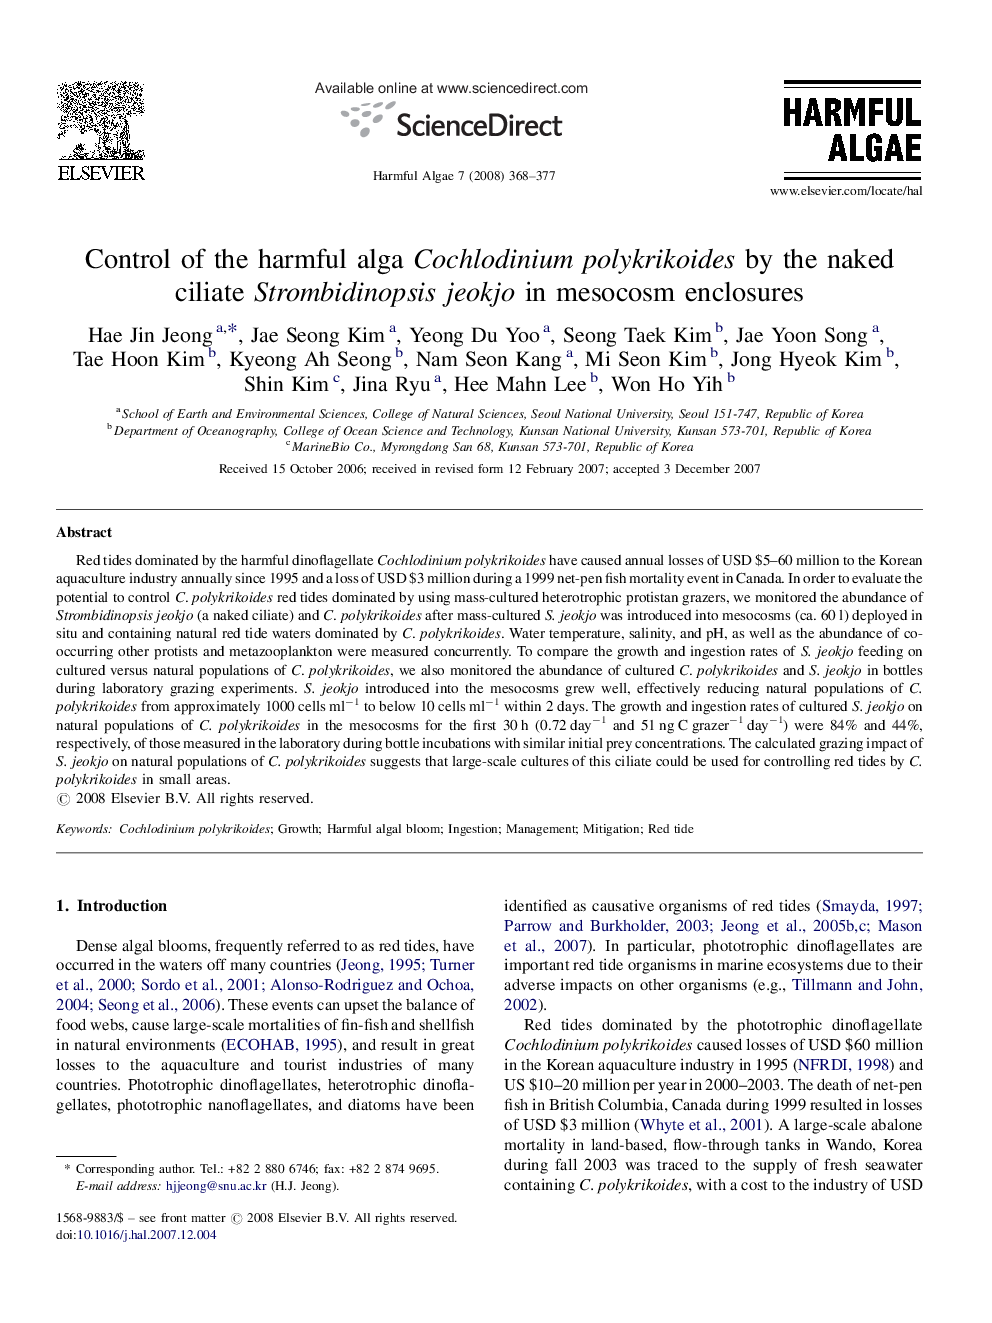 Control of the harmful alga Cochlodinium polykrikoides by the naked ciliate Strombidinopsis jeokjo in mesocosm enclosures